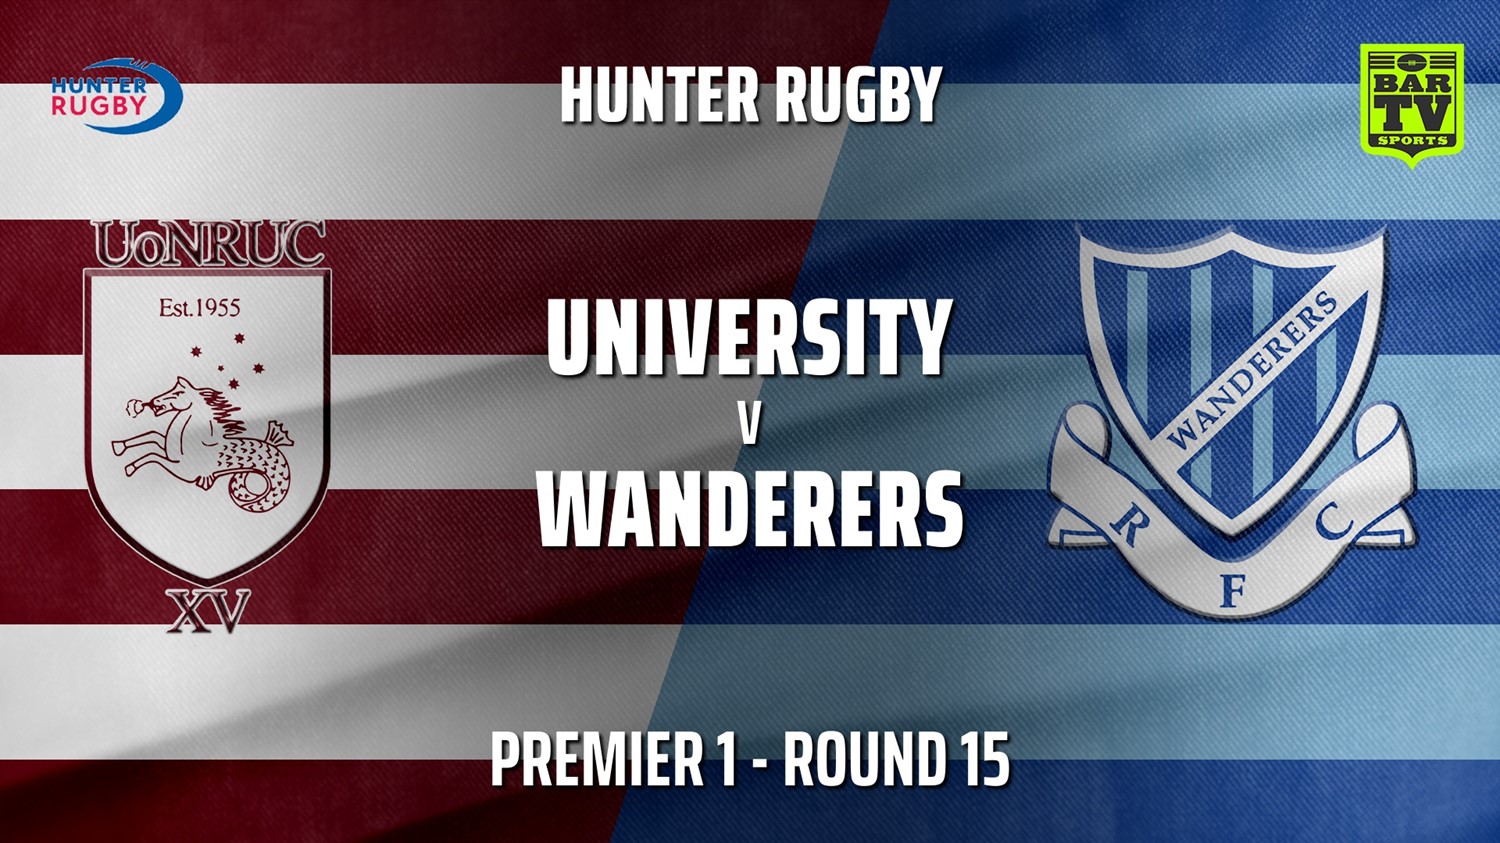 210731-Hunter Rugby Round 15 - Premier 1 - University Of Newcastle v Wanderers Minigame Slate Image